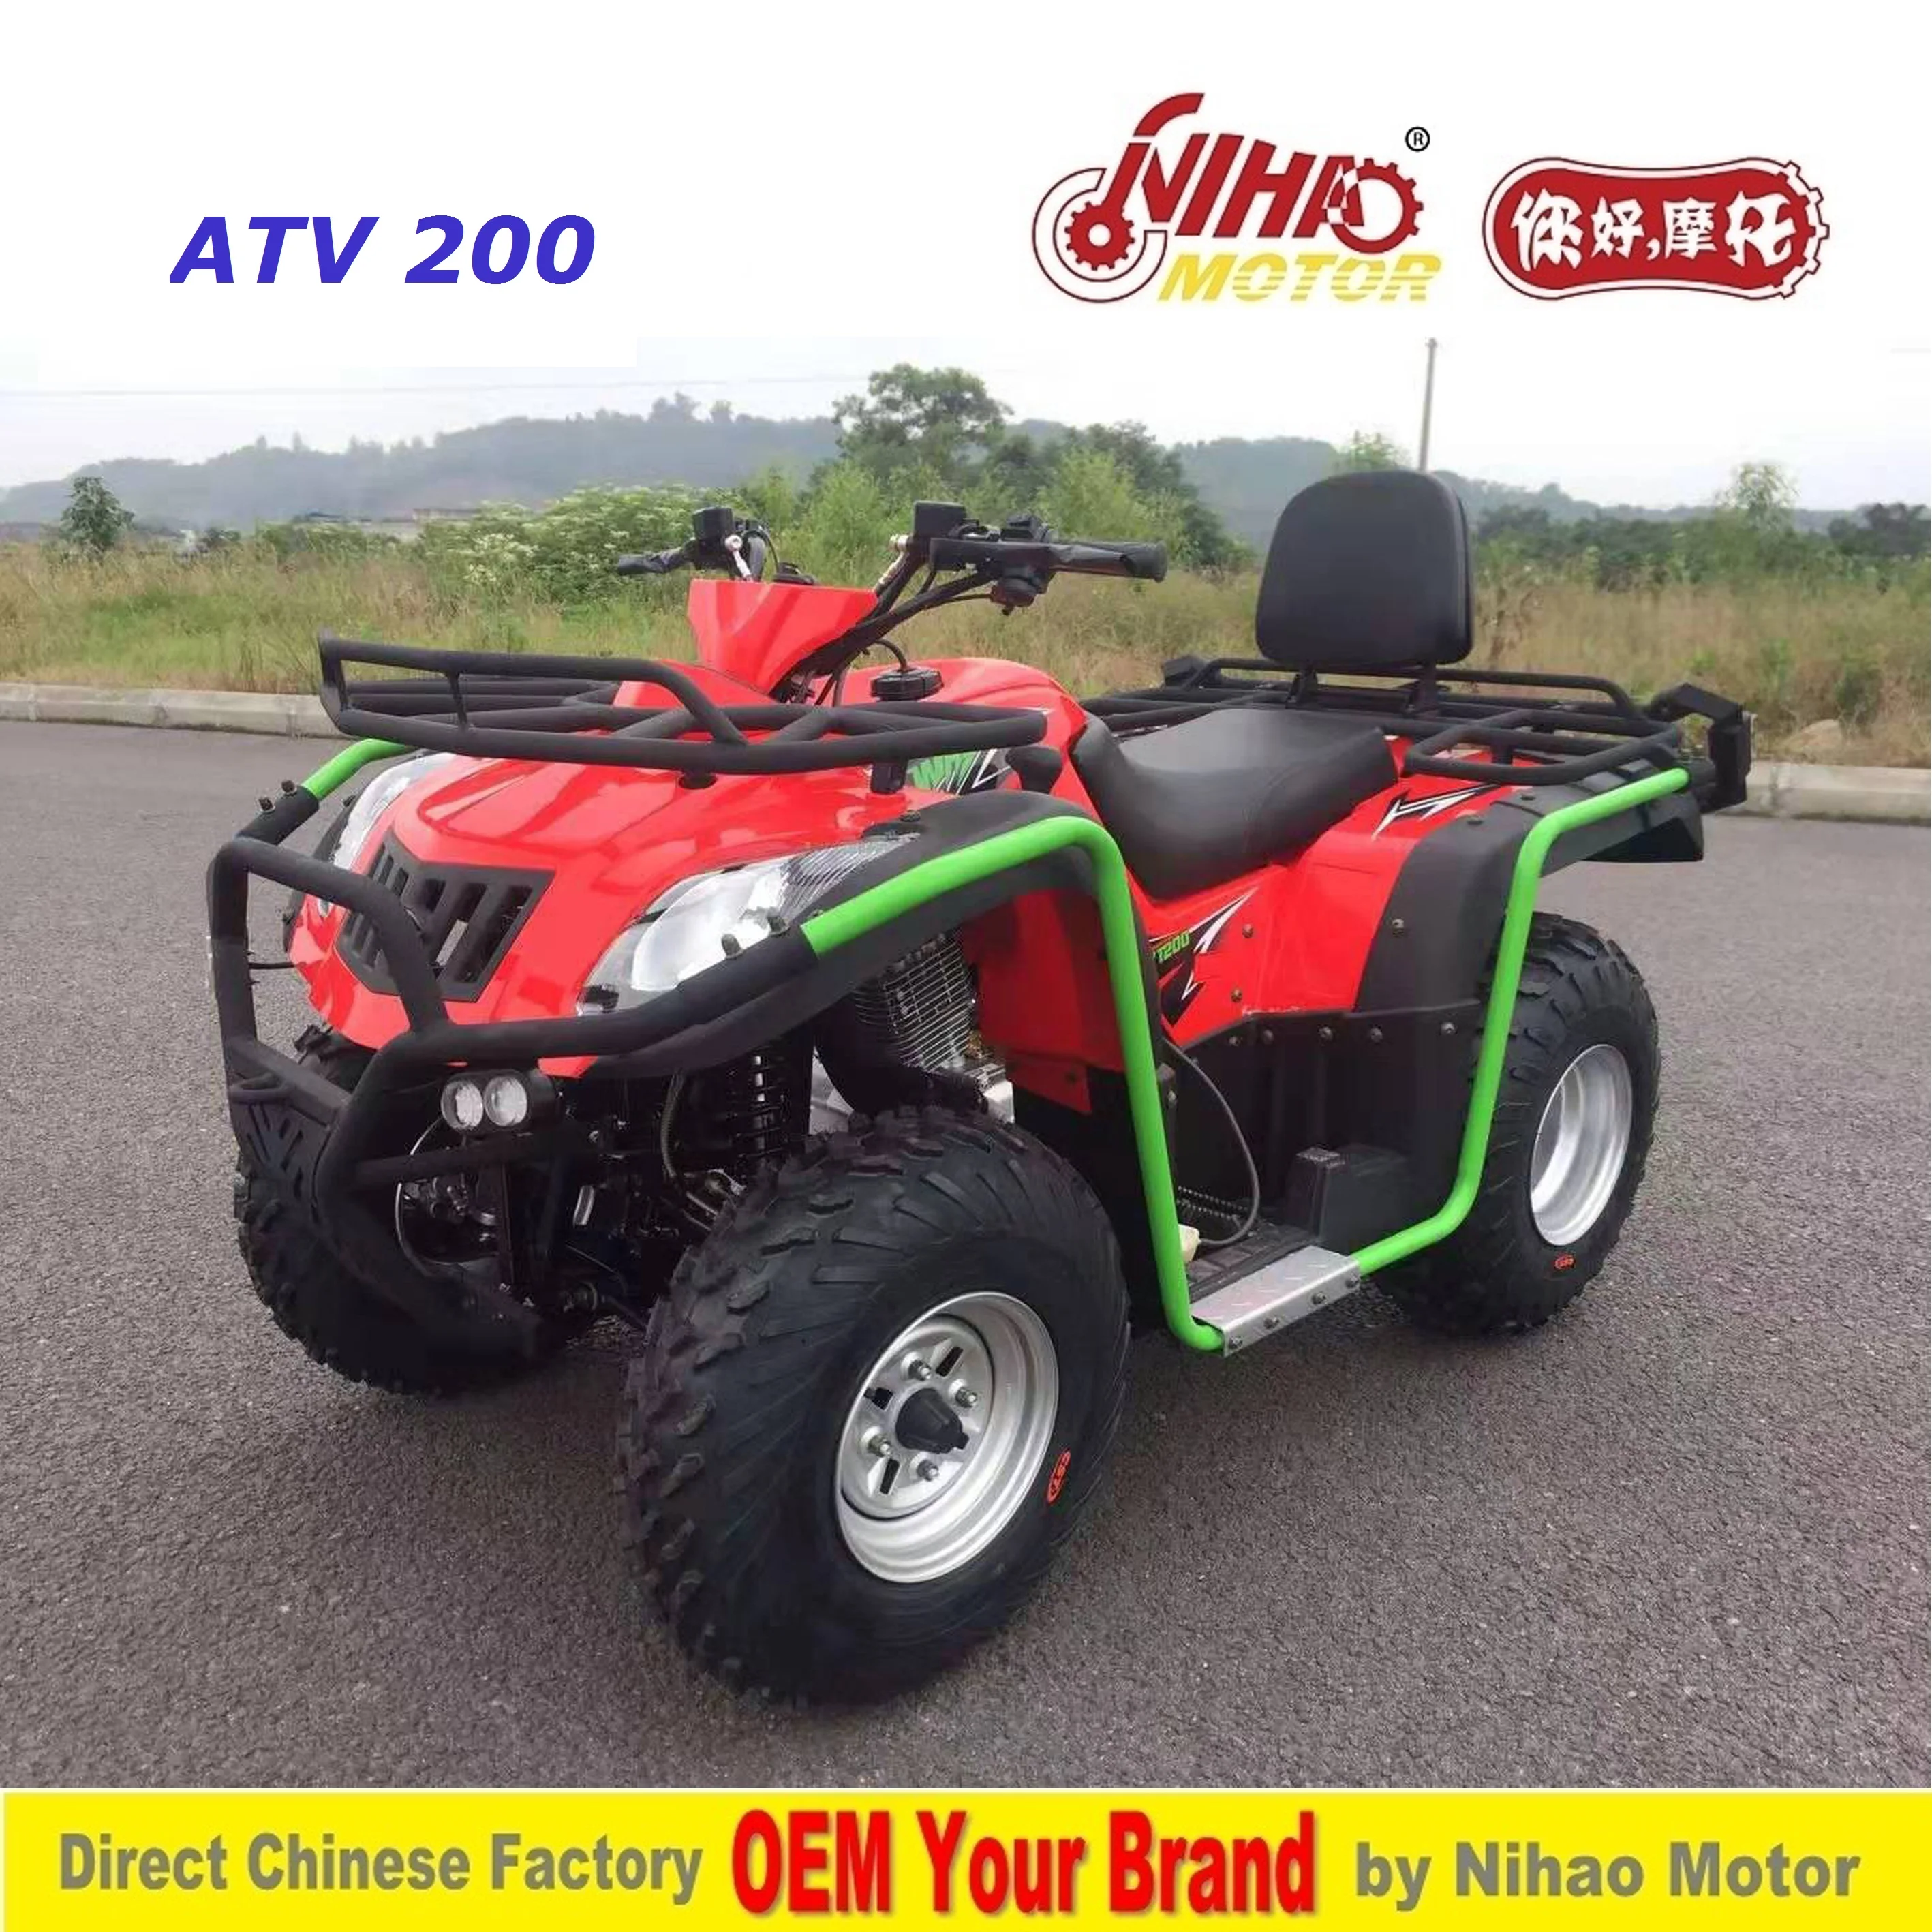 Taotao Atv Rear Sprocket 420 Size Whygostock Com